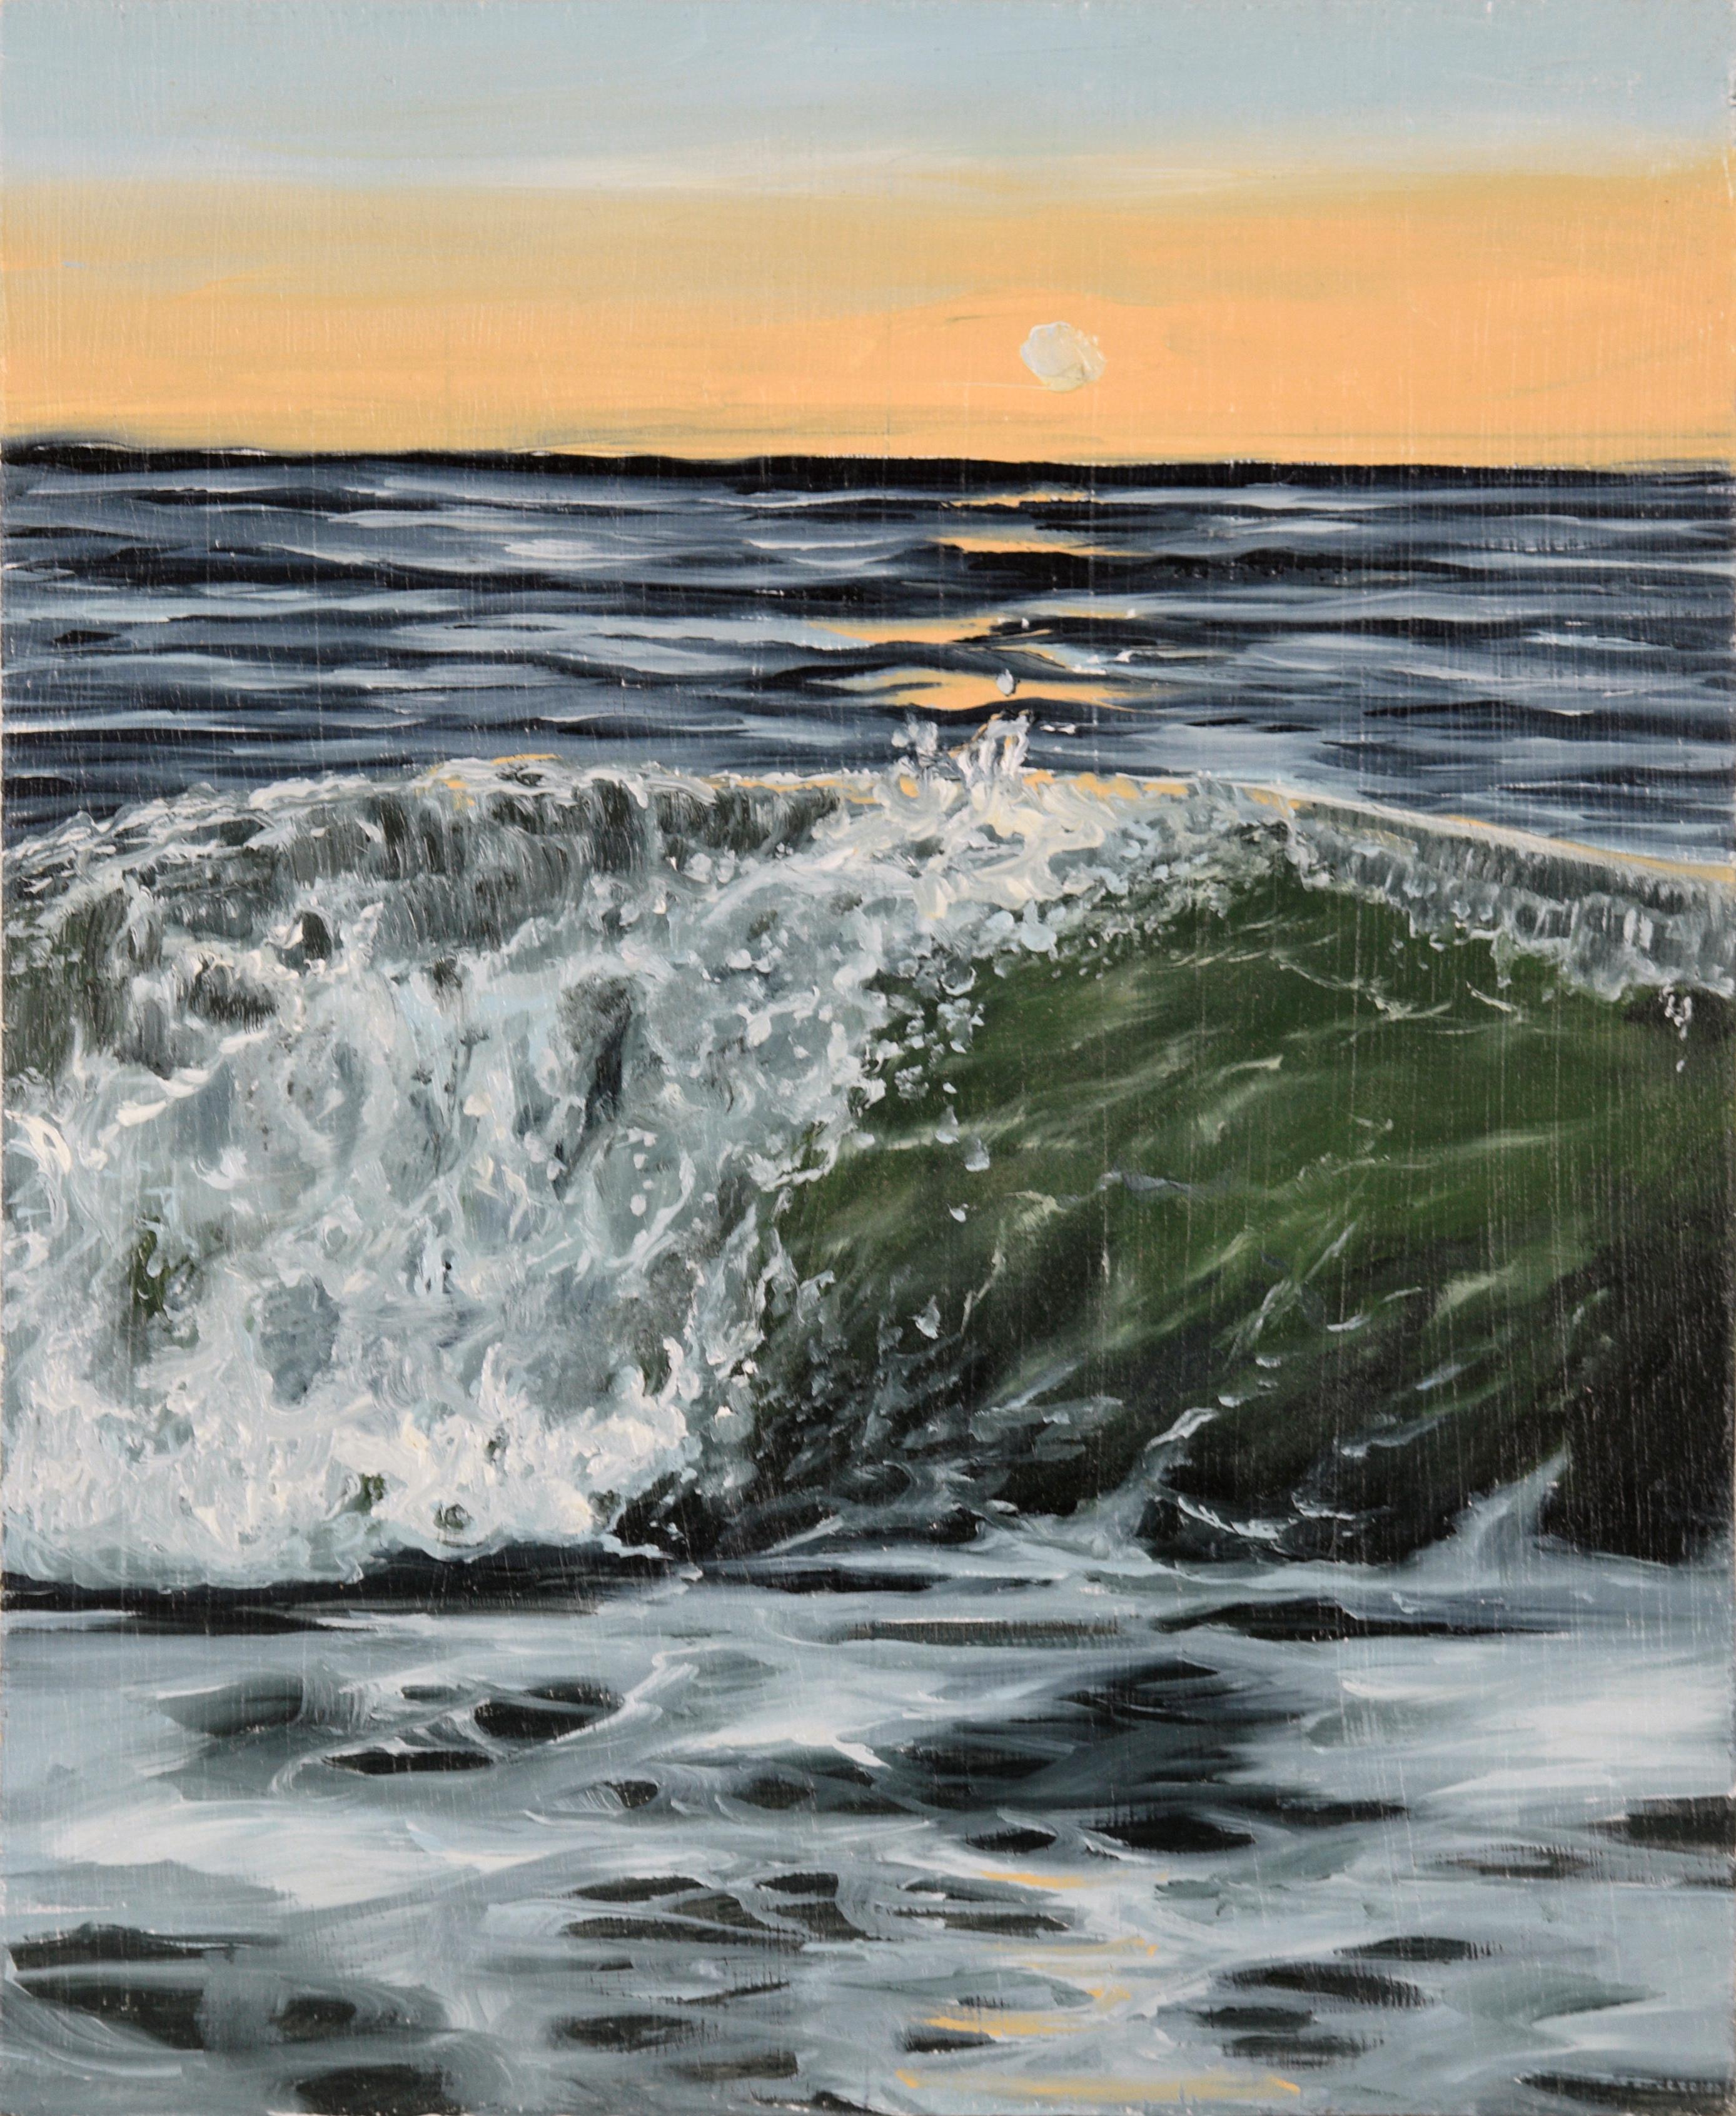 Sophie Adair Landscape Painting - "Anastasia" - Sunset Seascape with Crashing Wave